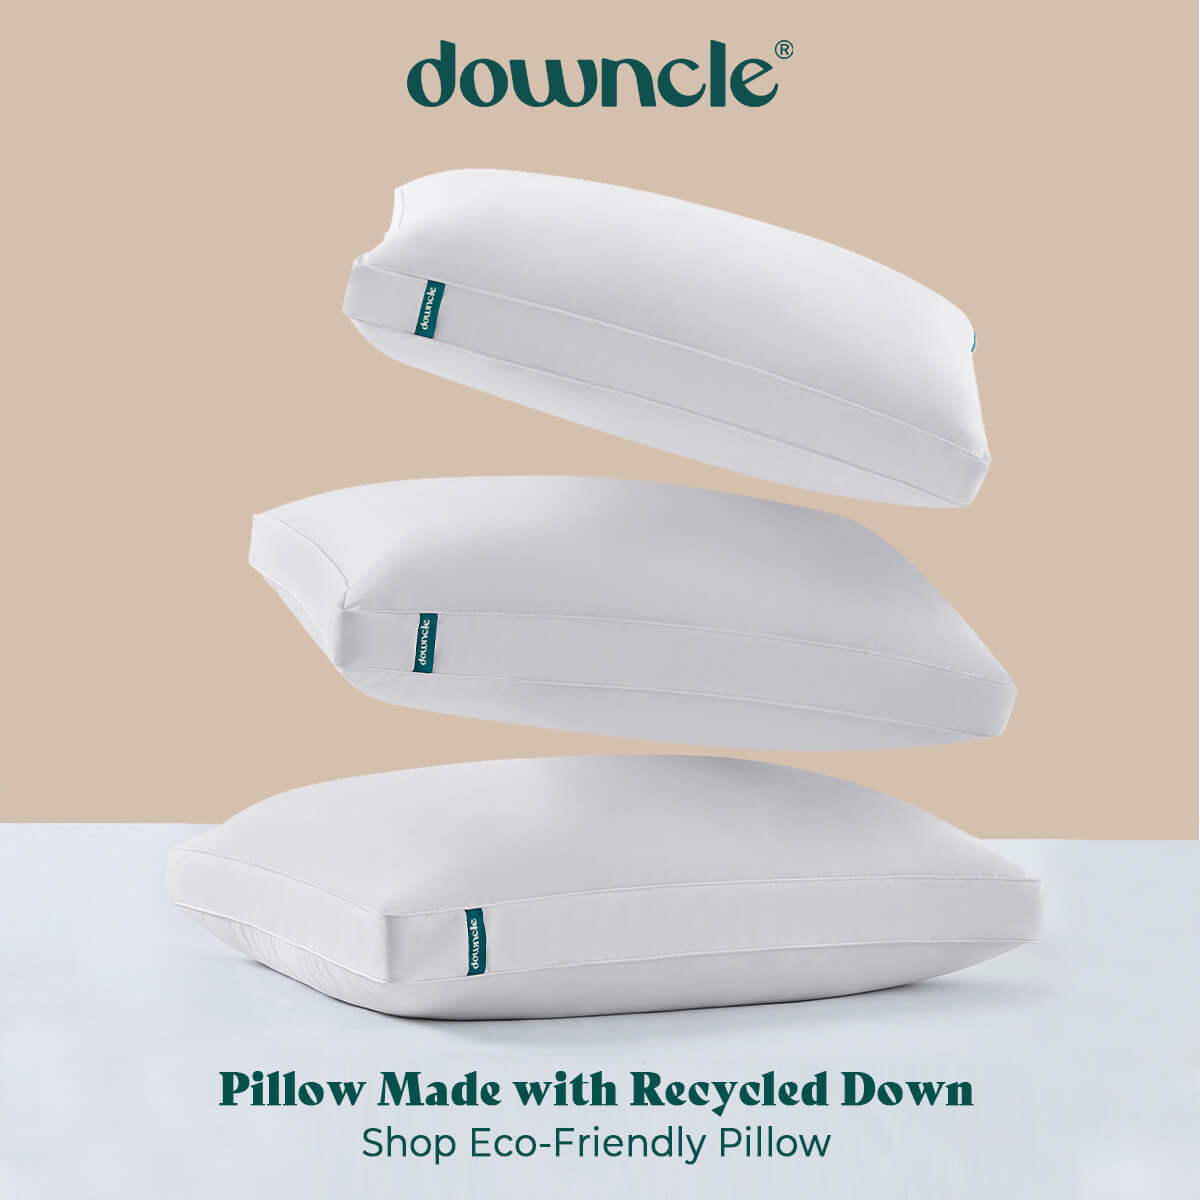 downcle Logo